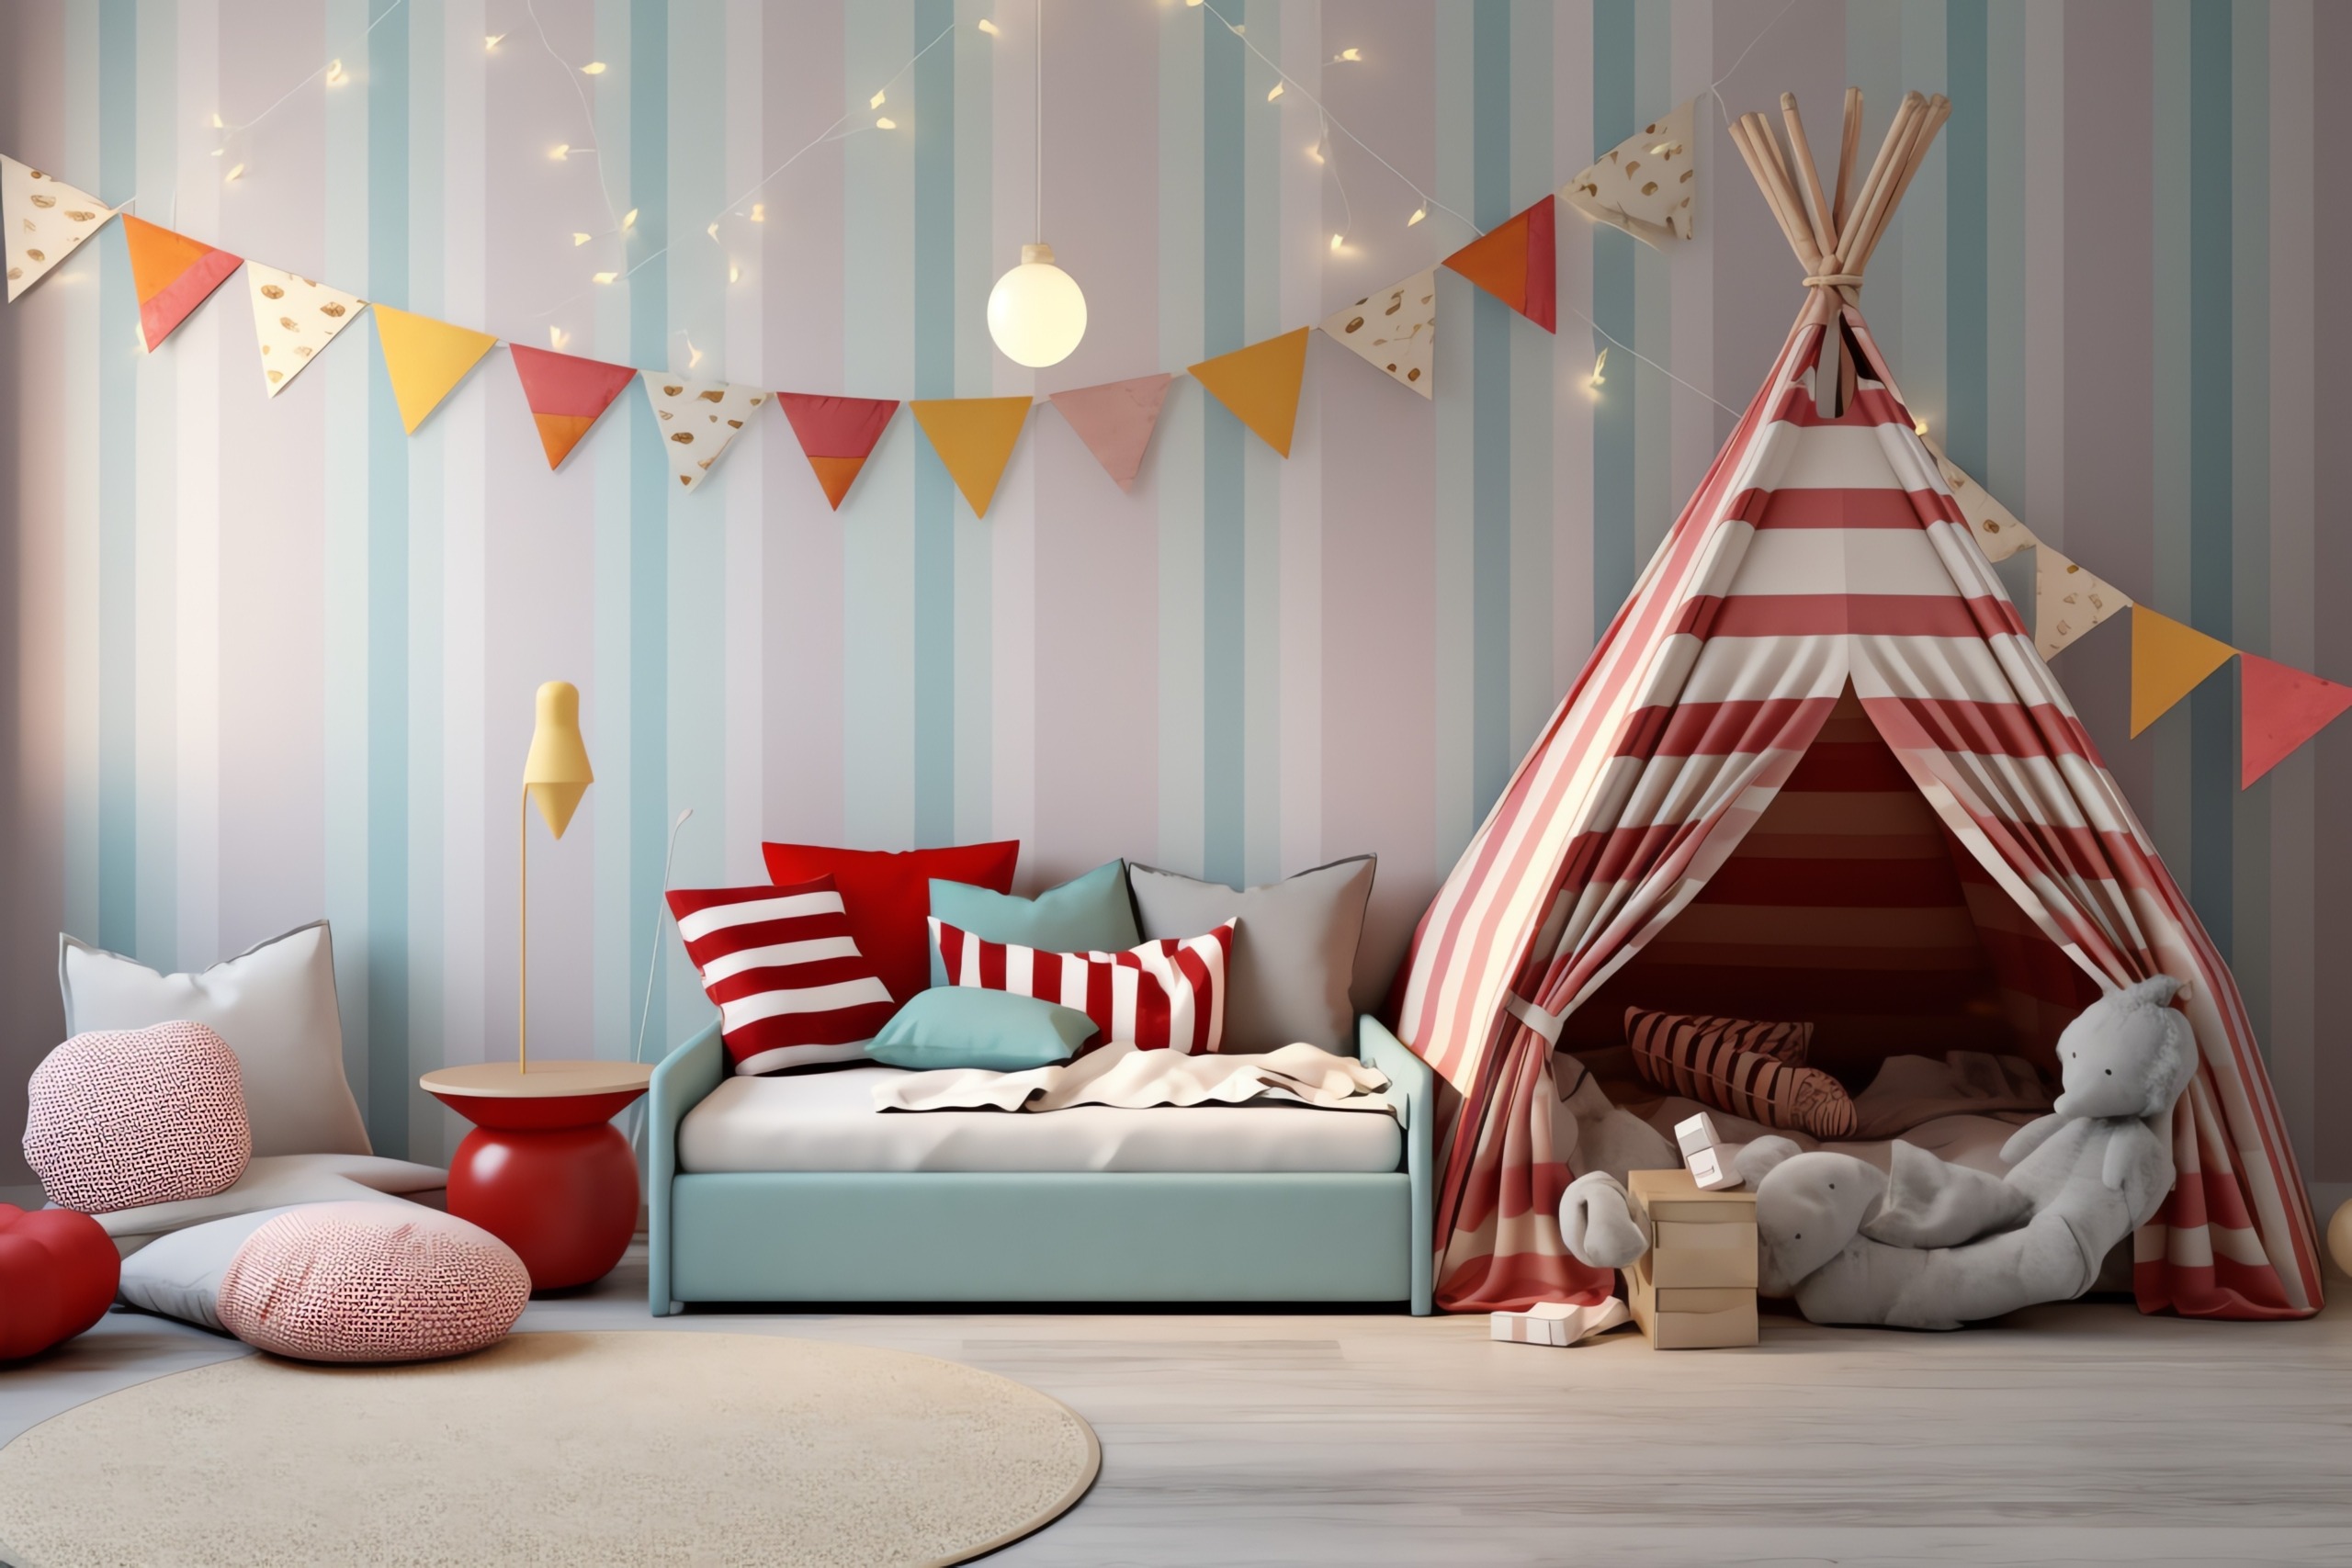 vecteezy_modern-child-bedroom-interior-design-in-house-with_26577328